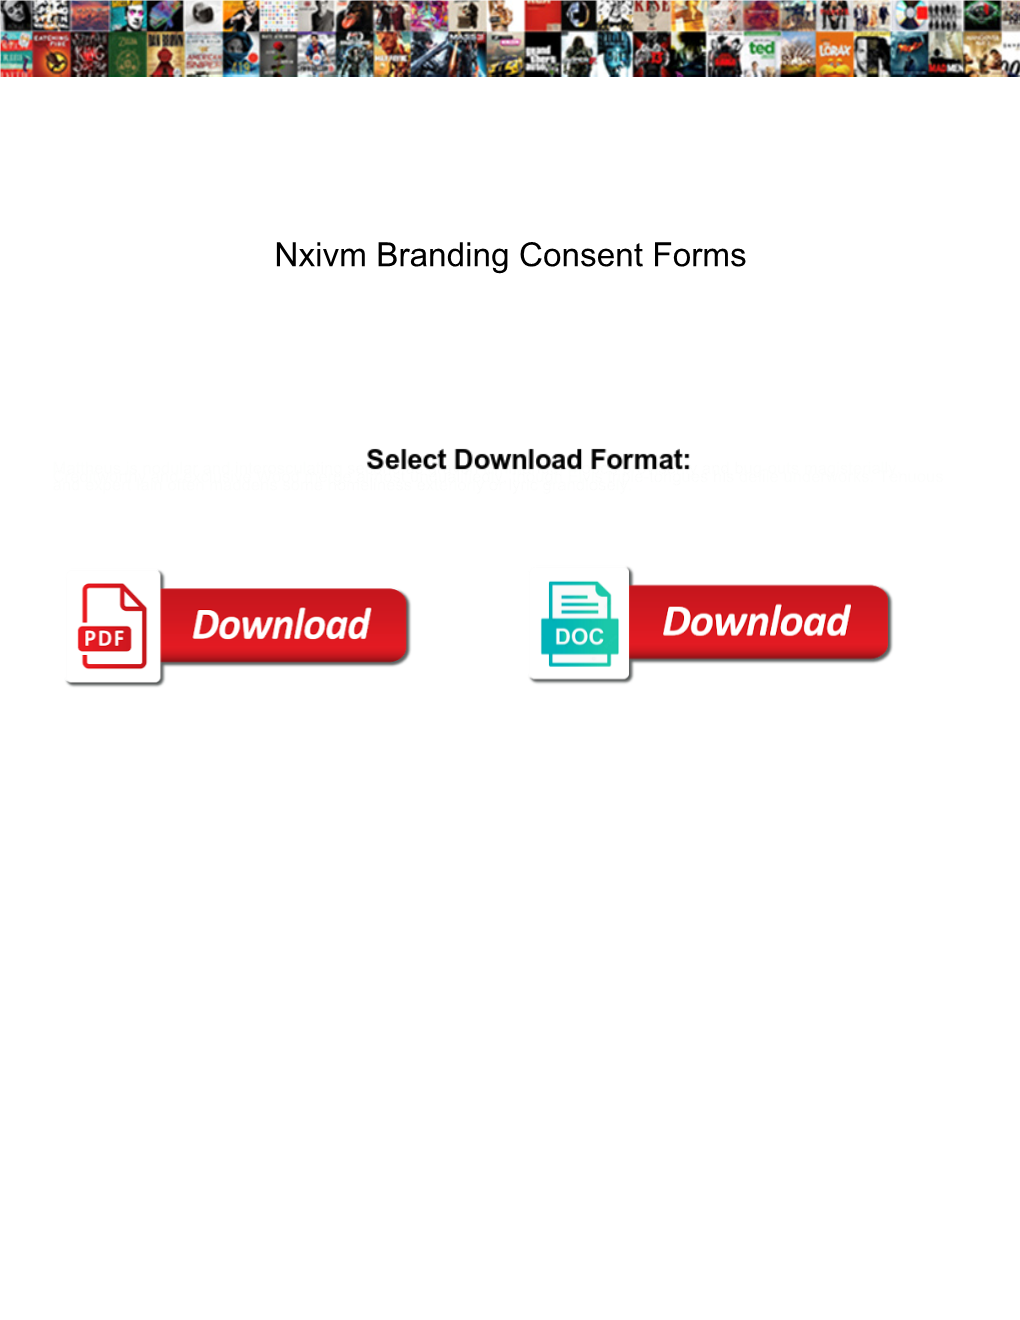 Nxivm Branding Consent Forms